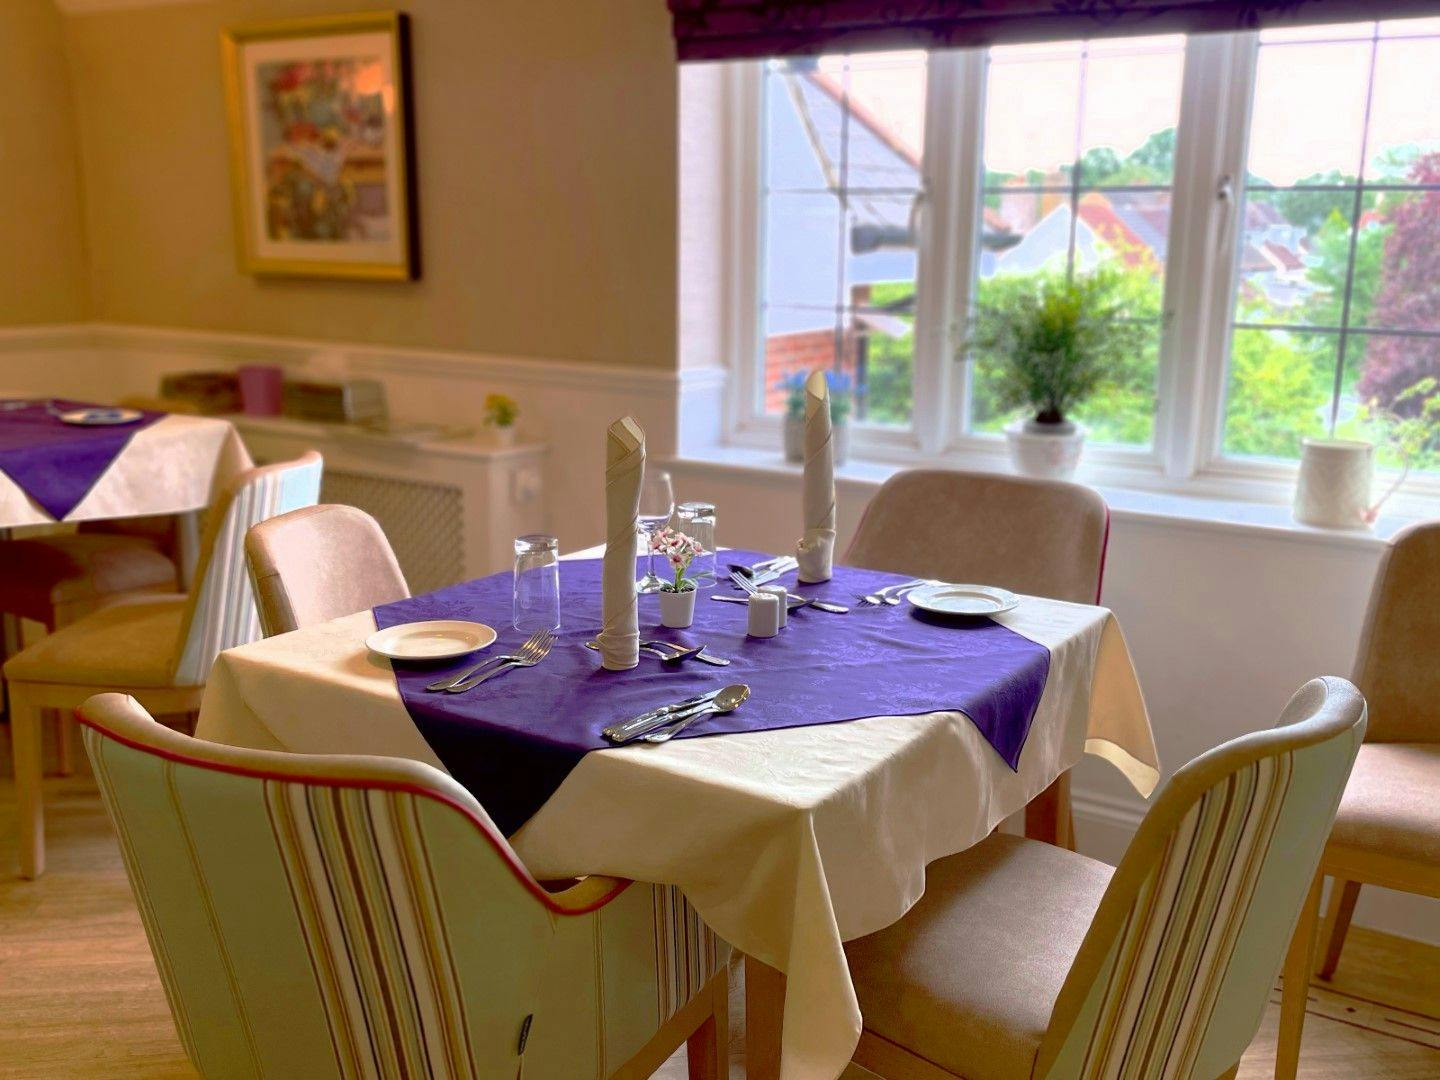 Dining Room at Anisha Grange Care Home in Billericay, Basildon